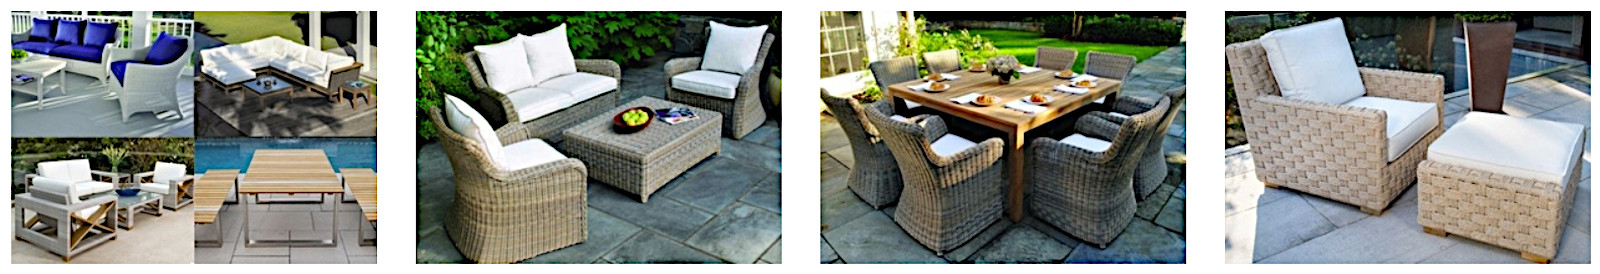 Sale Kingsley Bate teak garden furniture